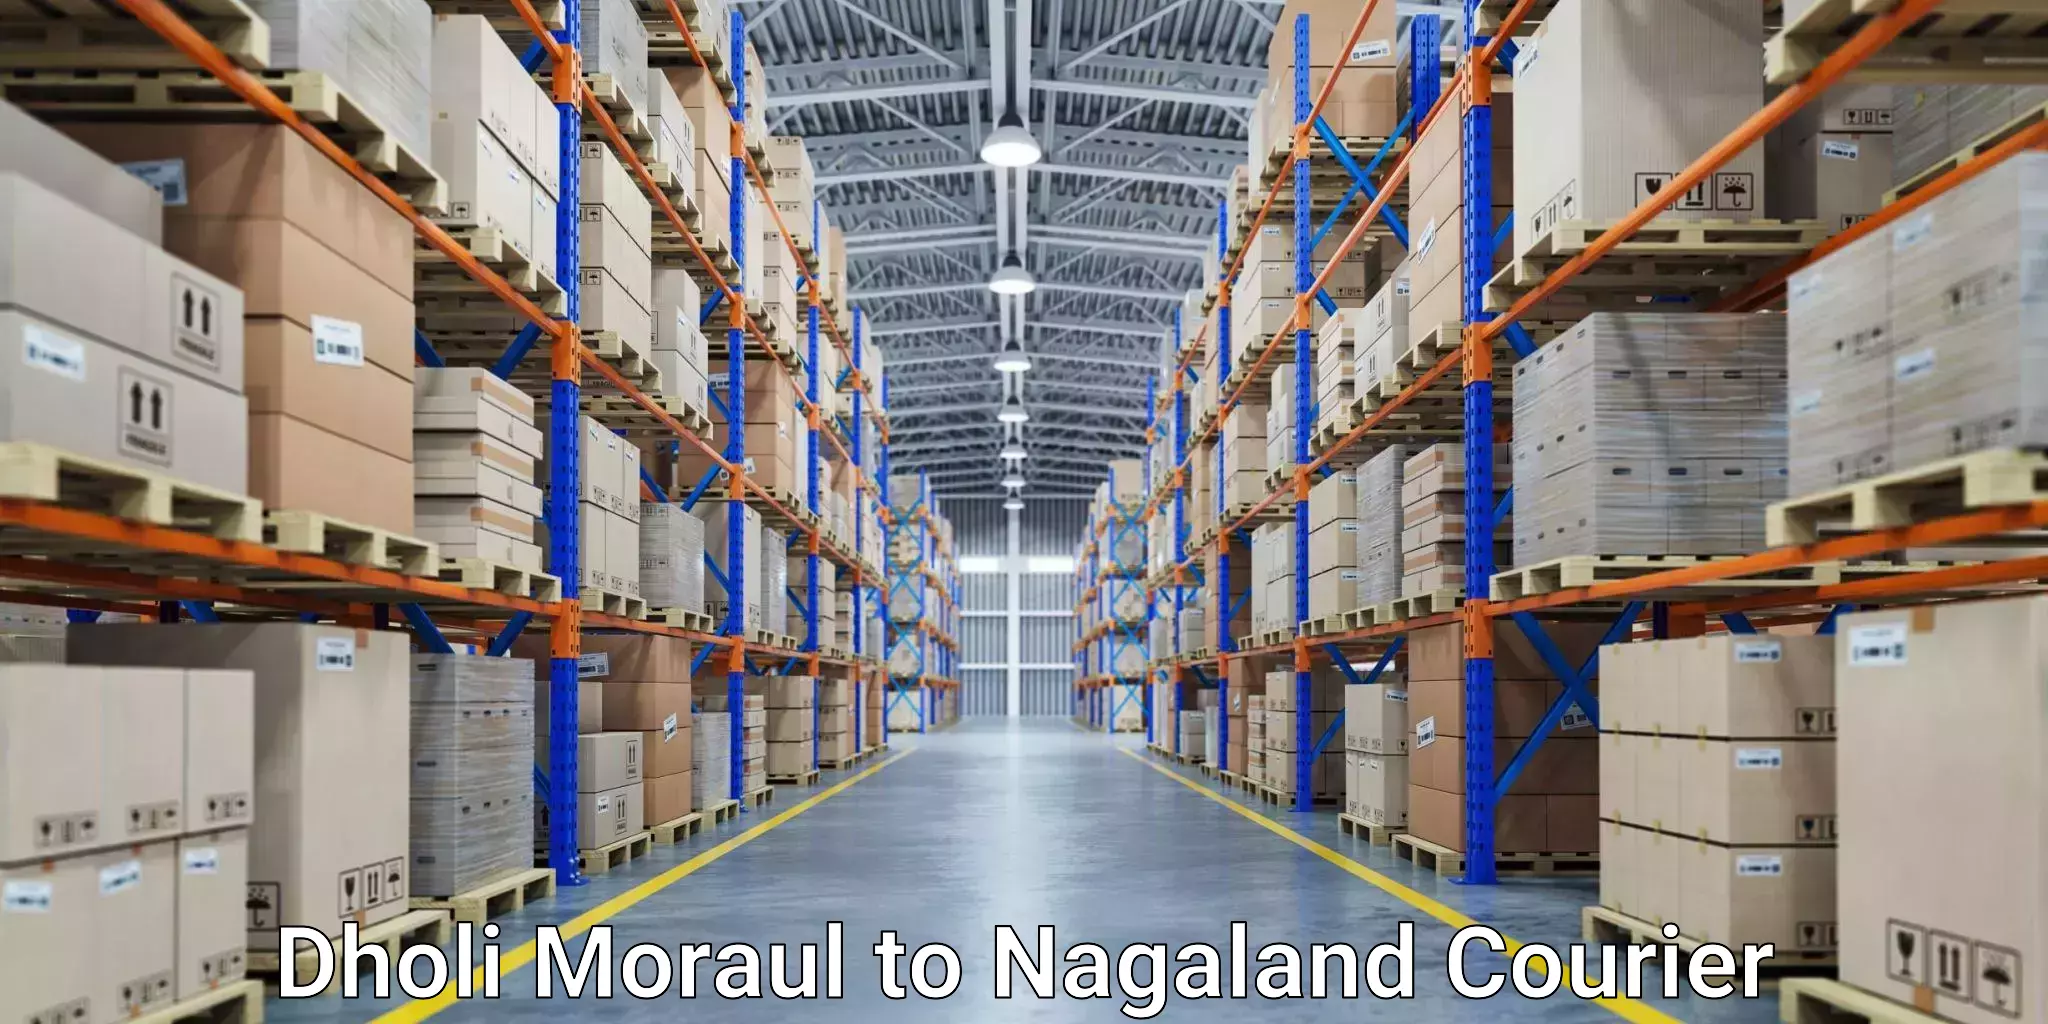 Customer-centric shipping Dholi Moraul to Nagaland